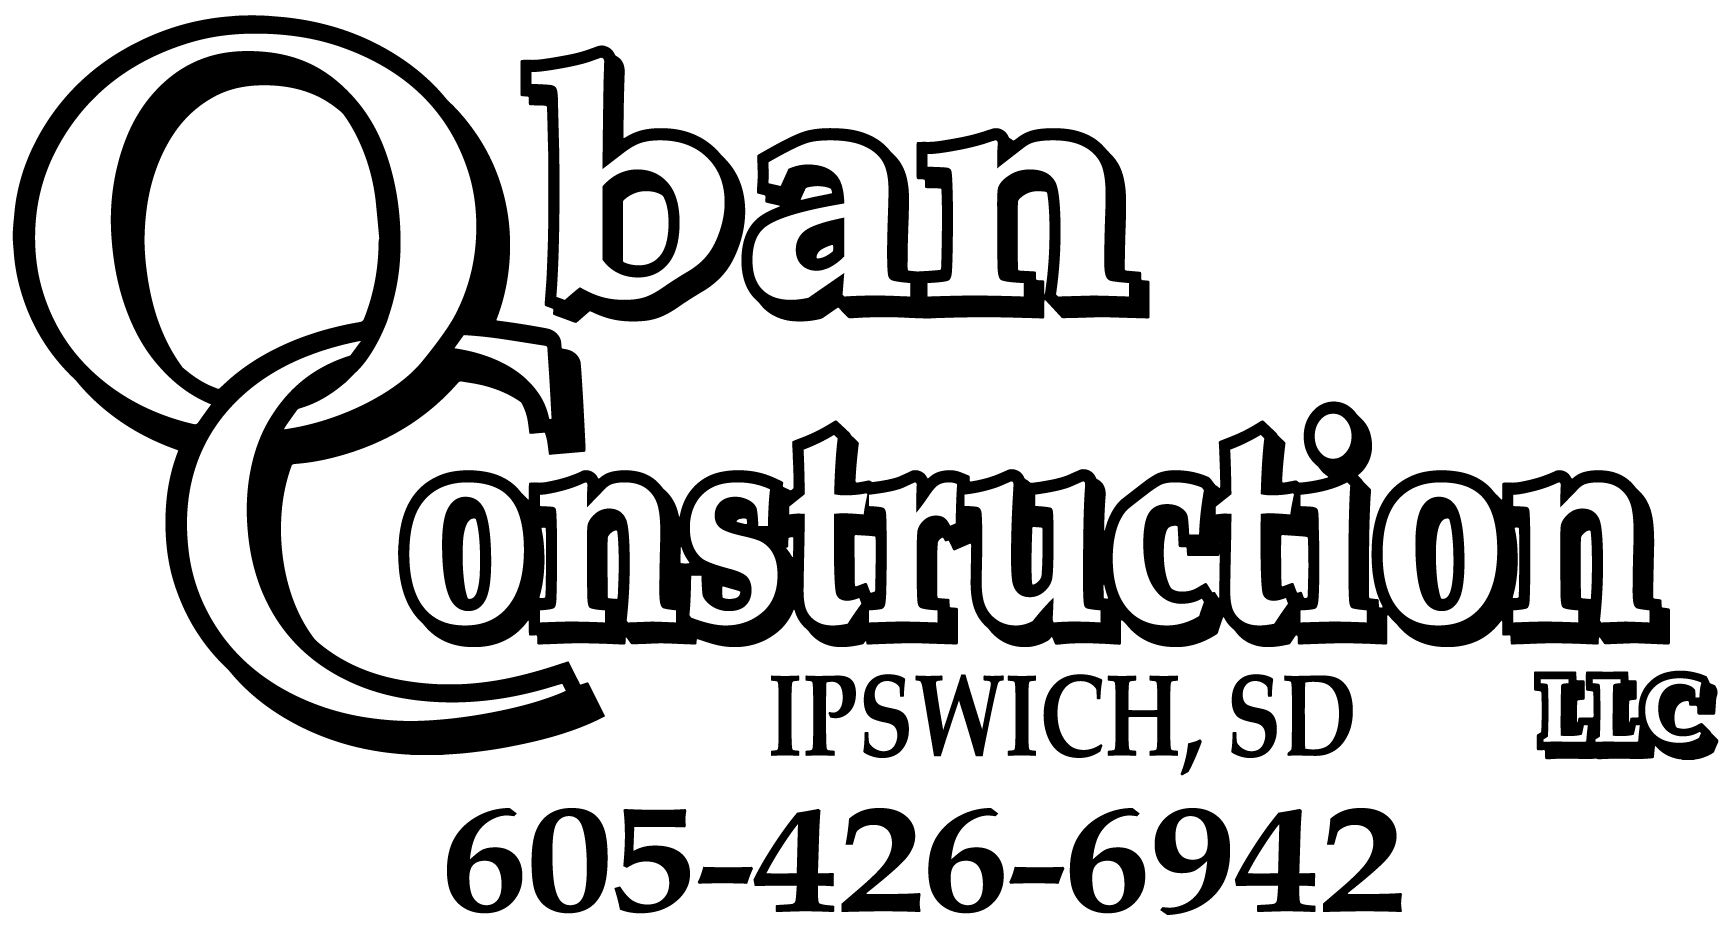 Oban Construction, LLC